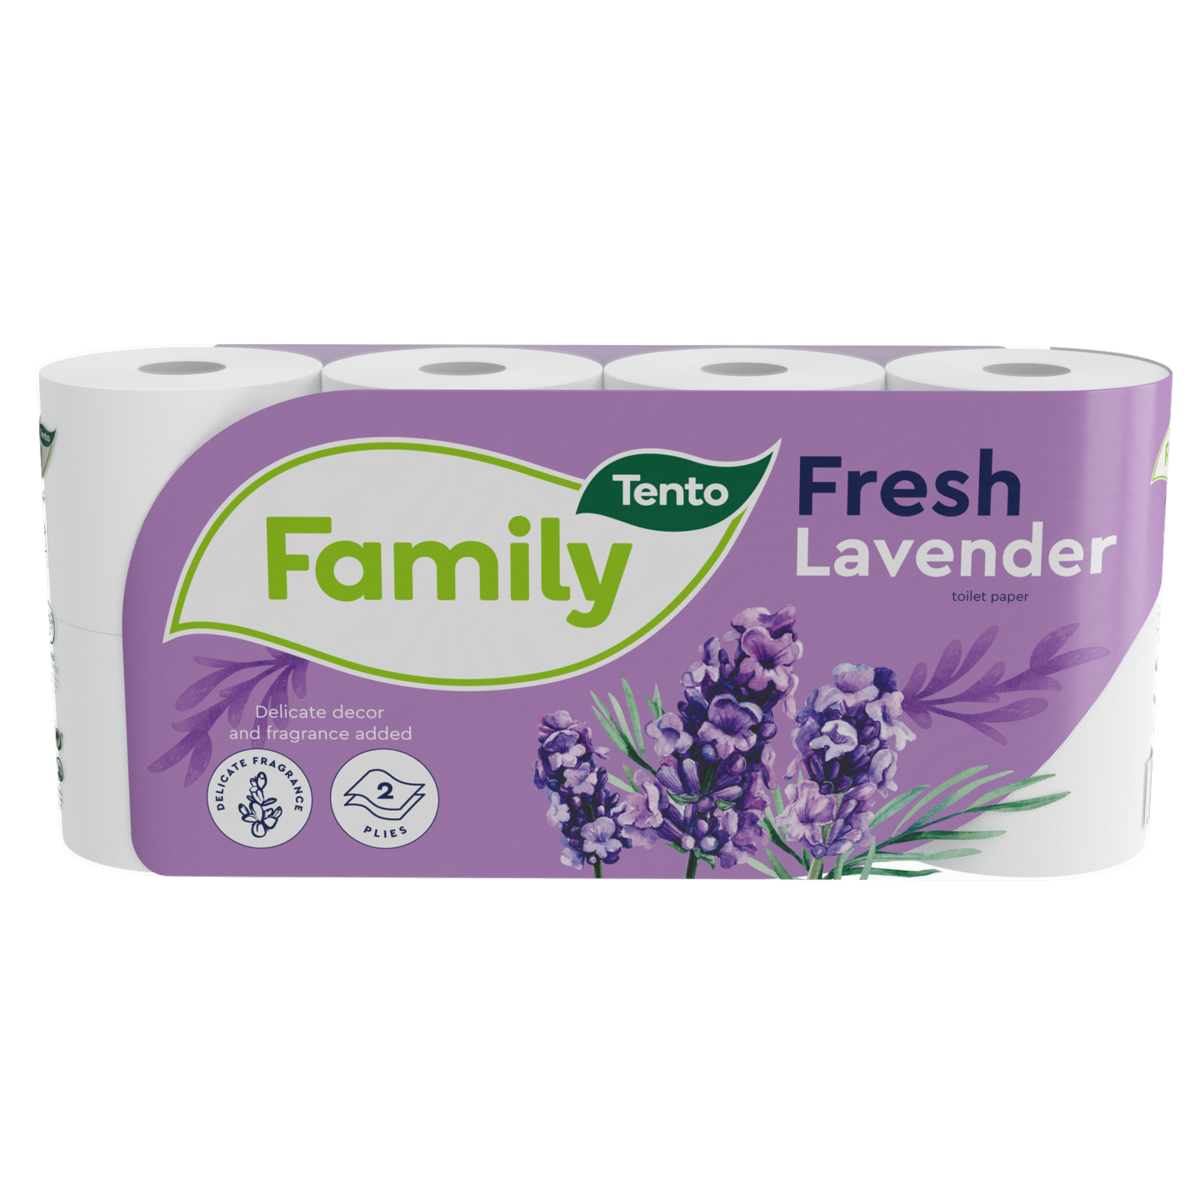 Tento Family Fresh Lavender